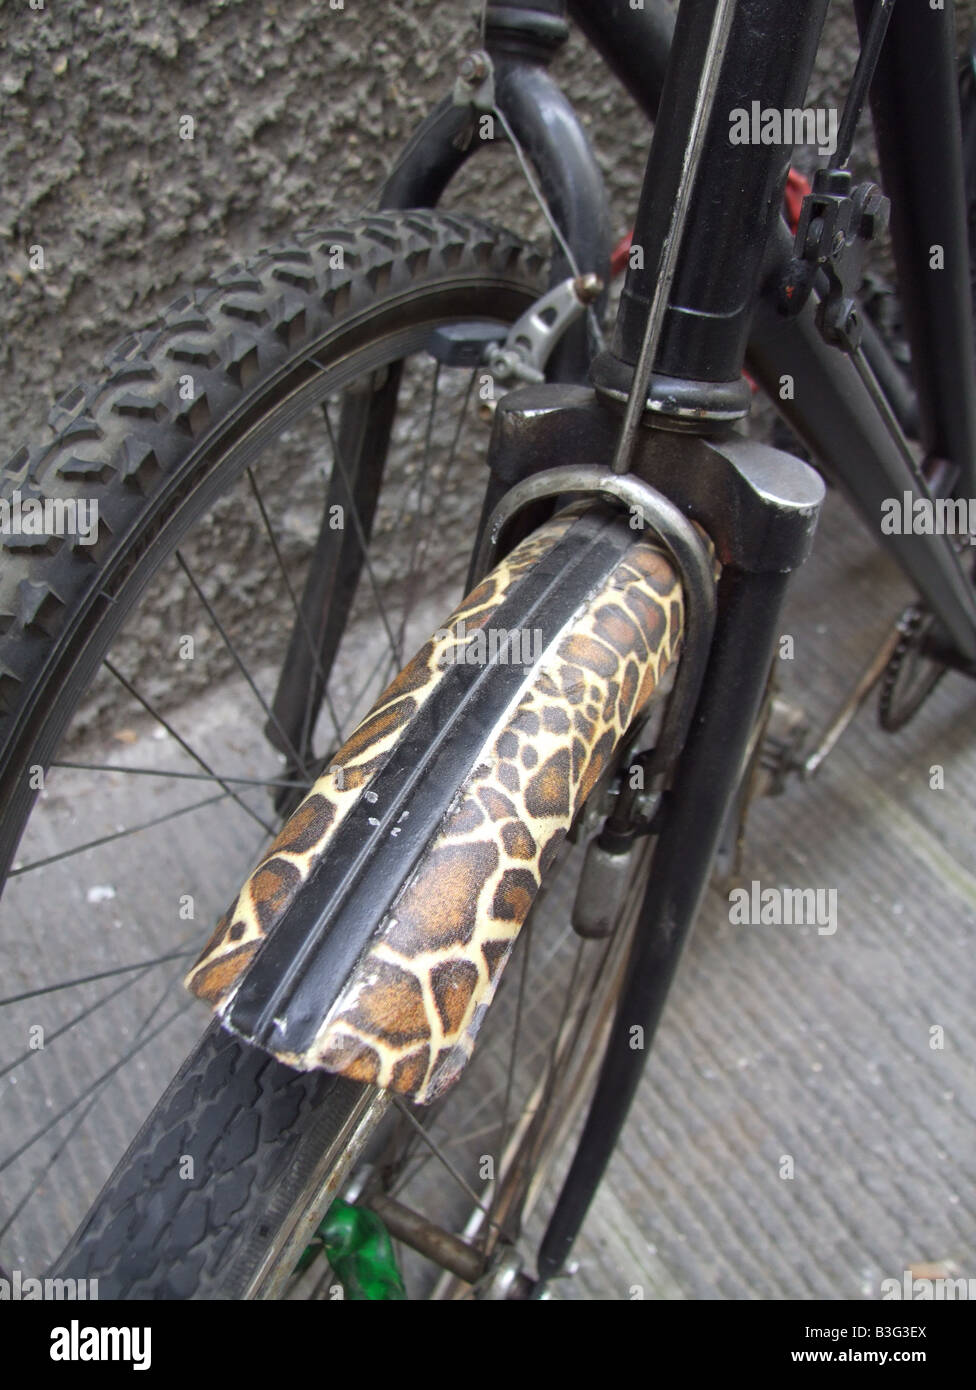 Leopard-Haut-Design auf Fahrrad Schutzblech Stockfotografie - Alamy